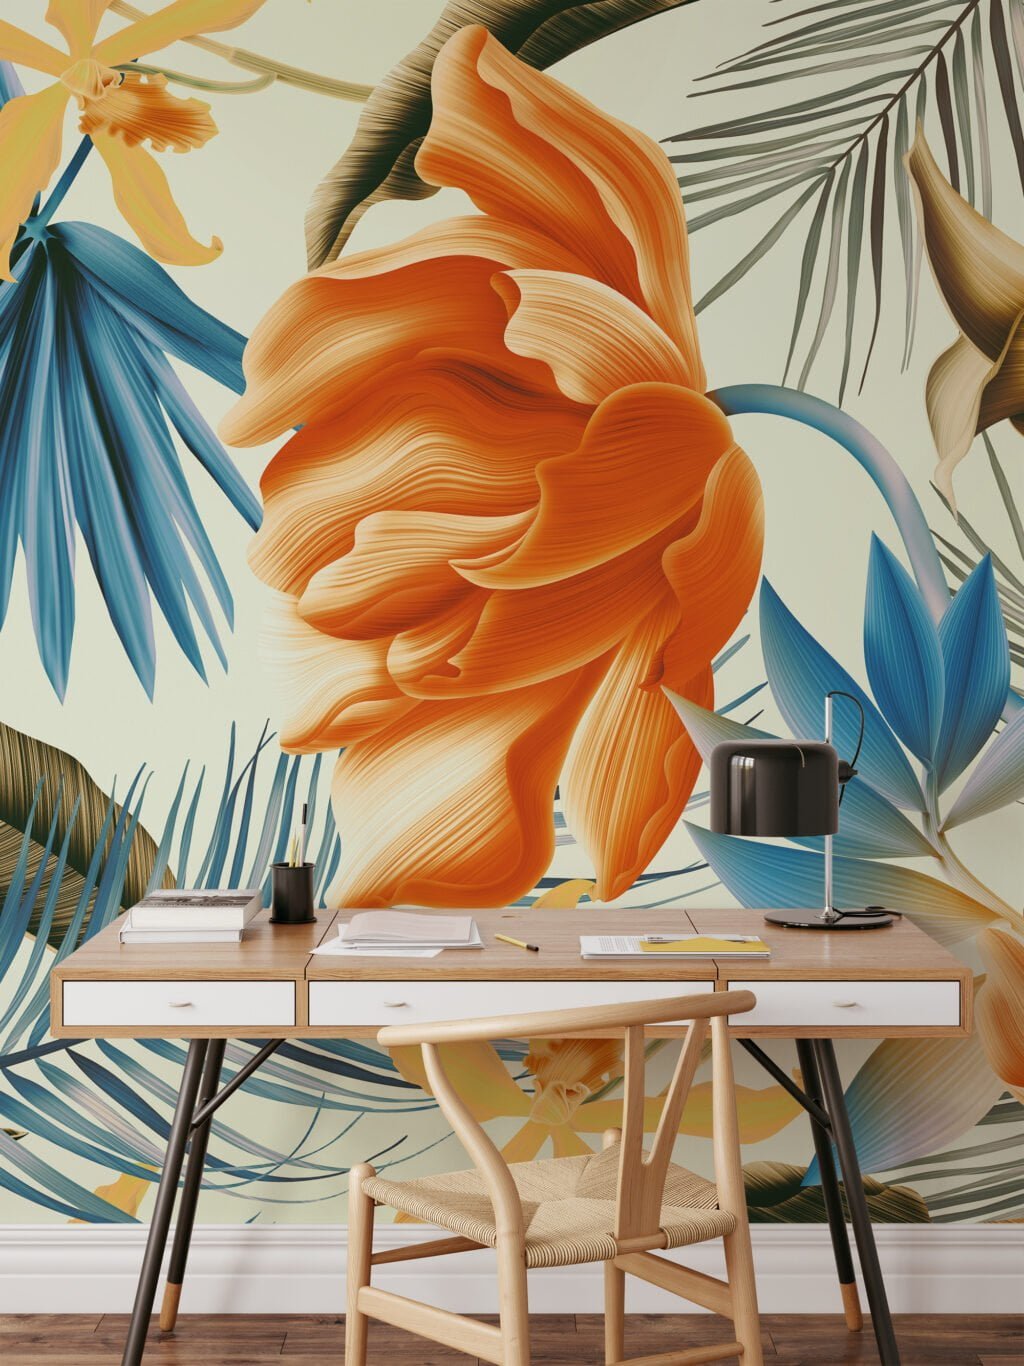 Large Tropical Orange Flowers With Blue Leaves Wallpaper, Vibrant Botanical Elegant Peel & Stick Wall Mural